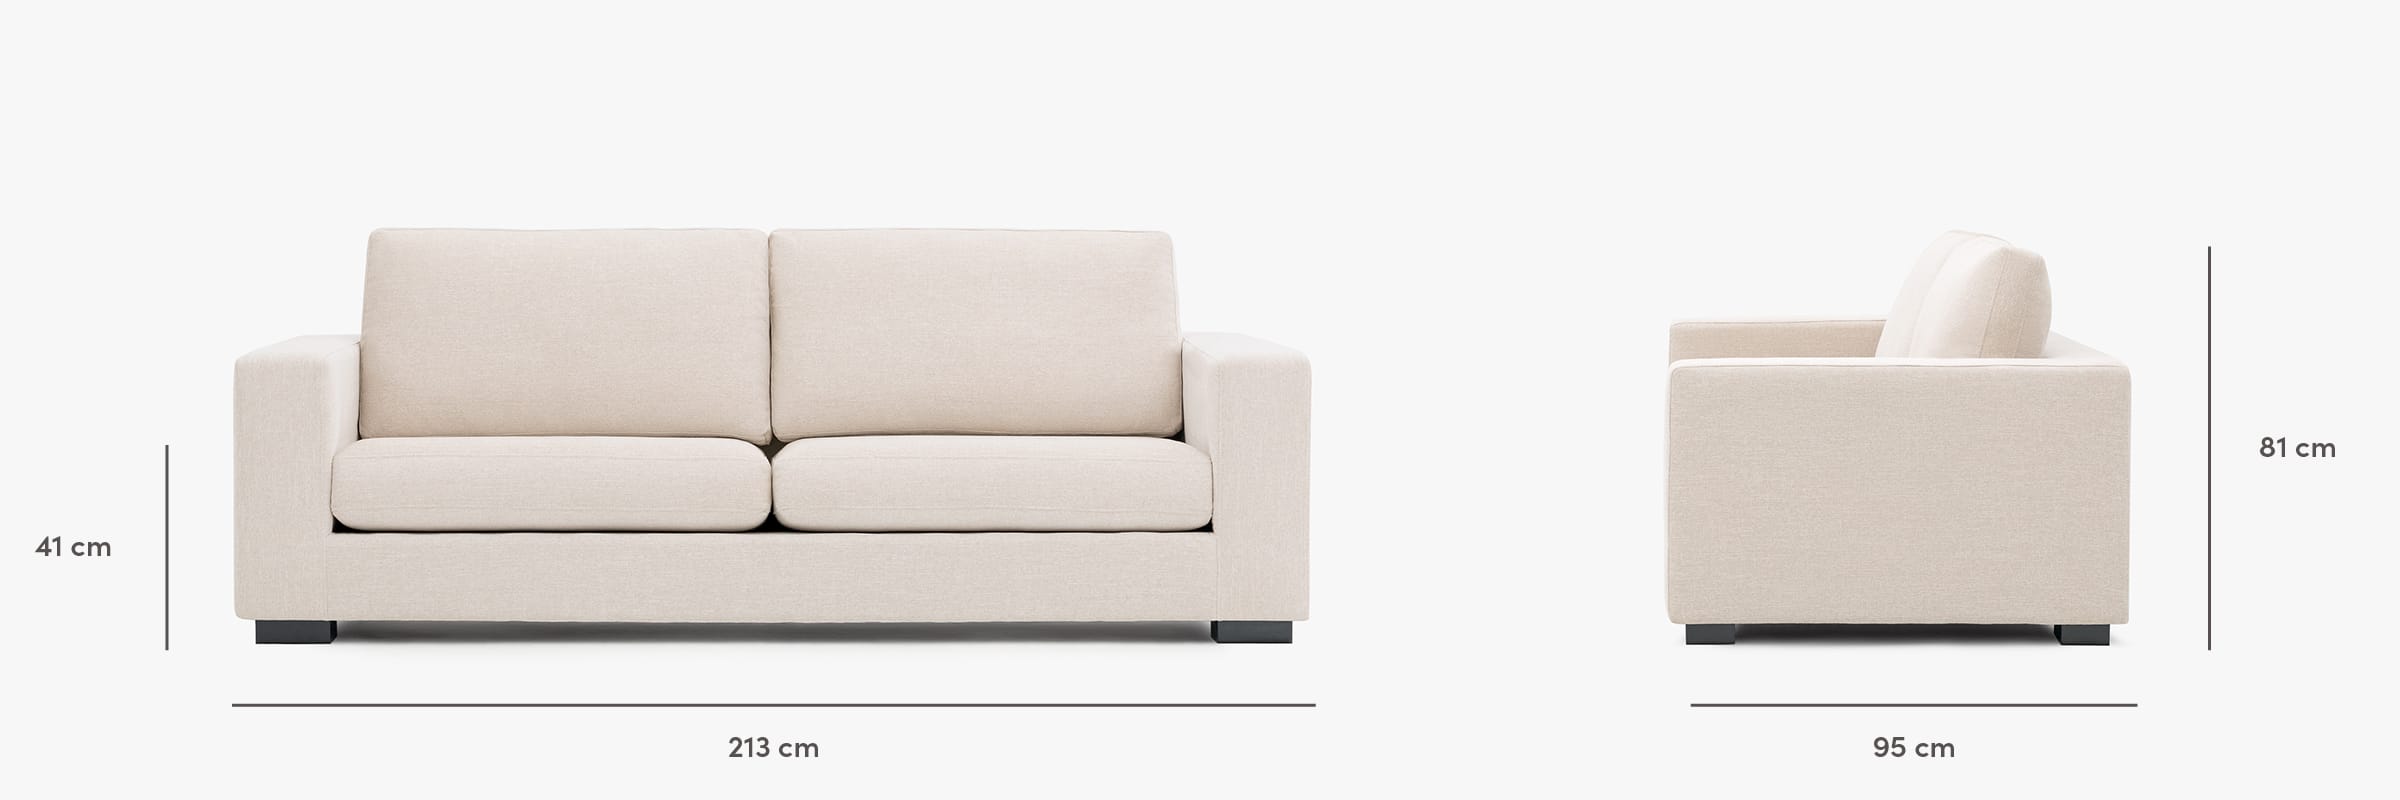 Malibu sofa dimensions